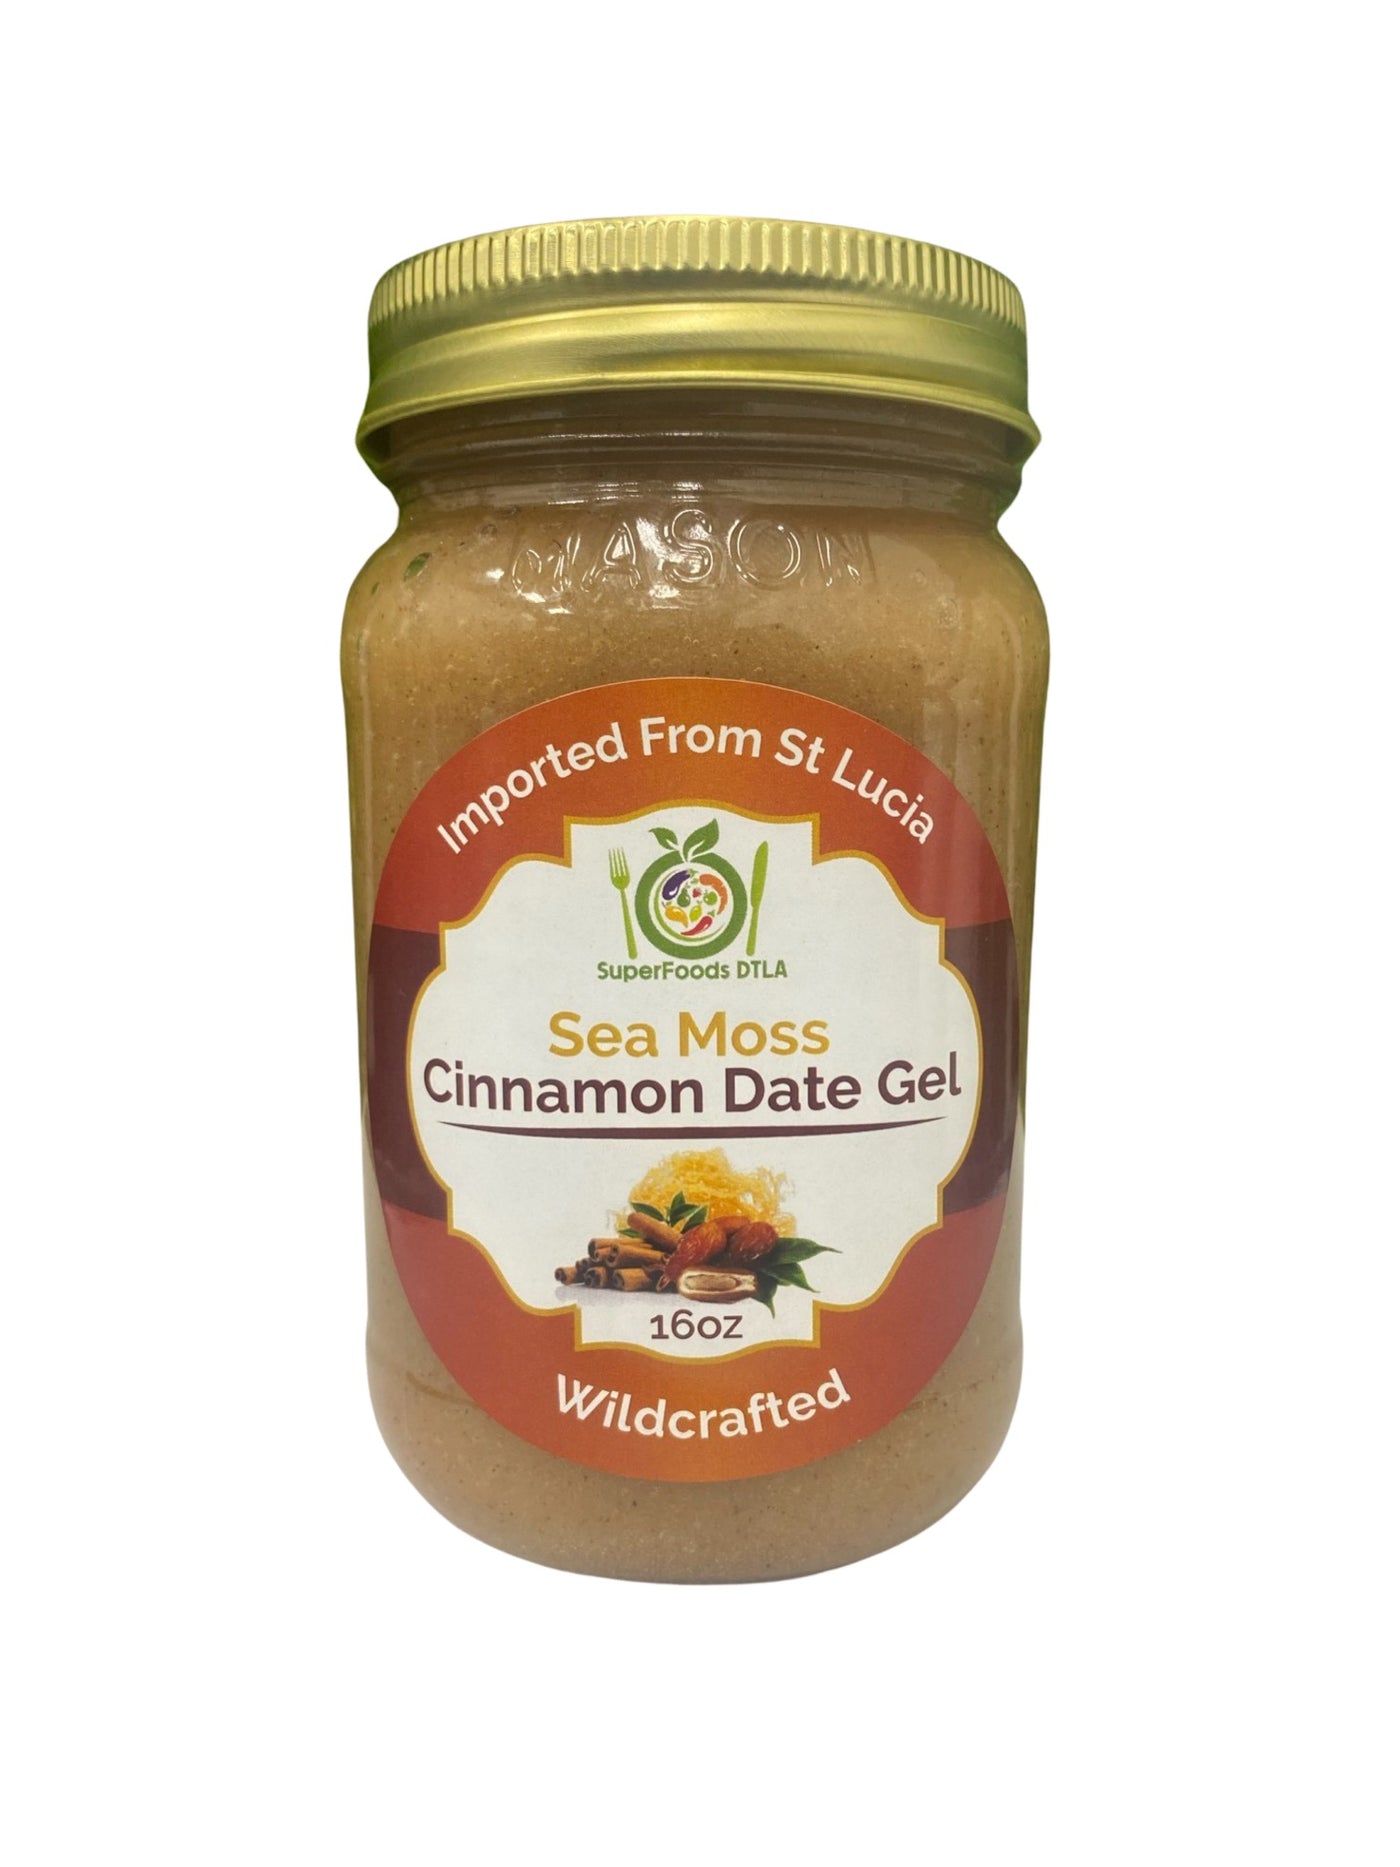 16oz Sea Moss Cinnamon Date Gel